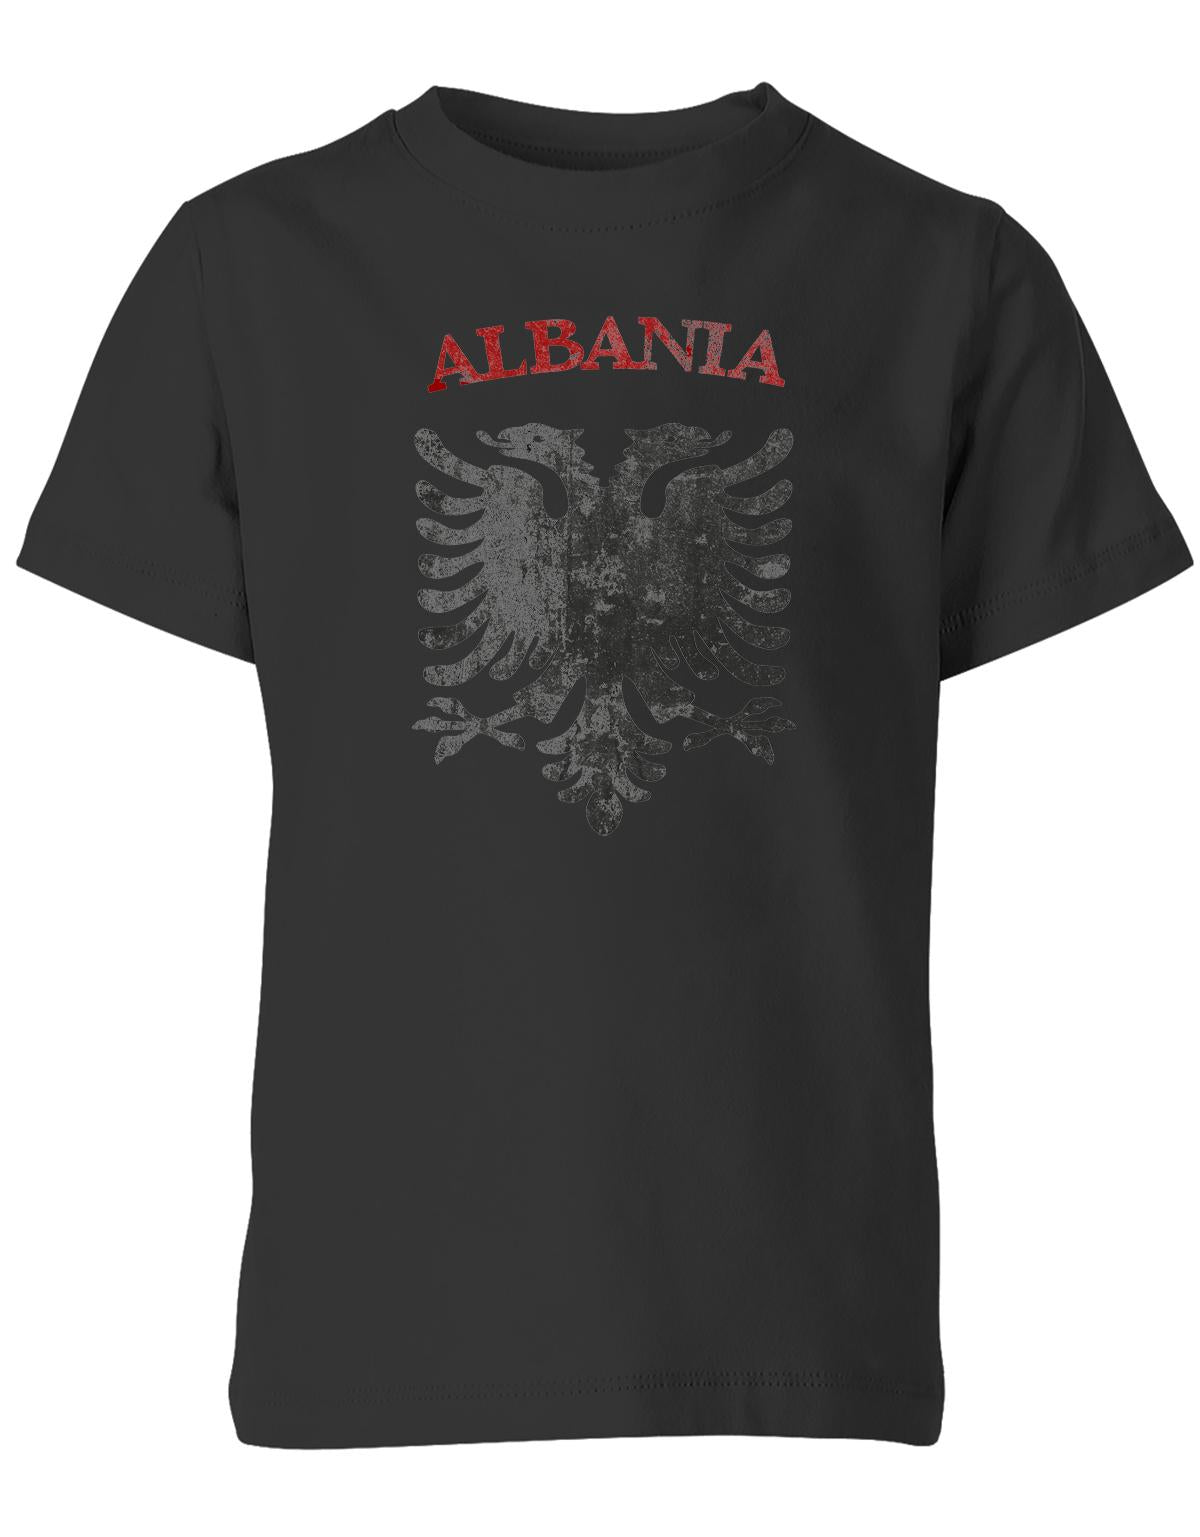 Albania-Vintage-Kinder-Shirt-Schwarz